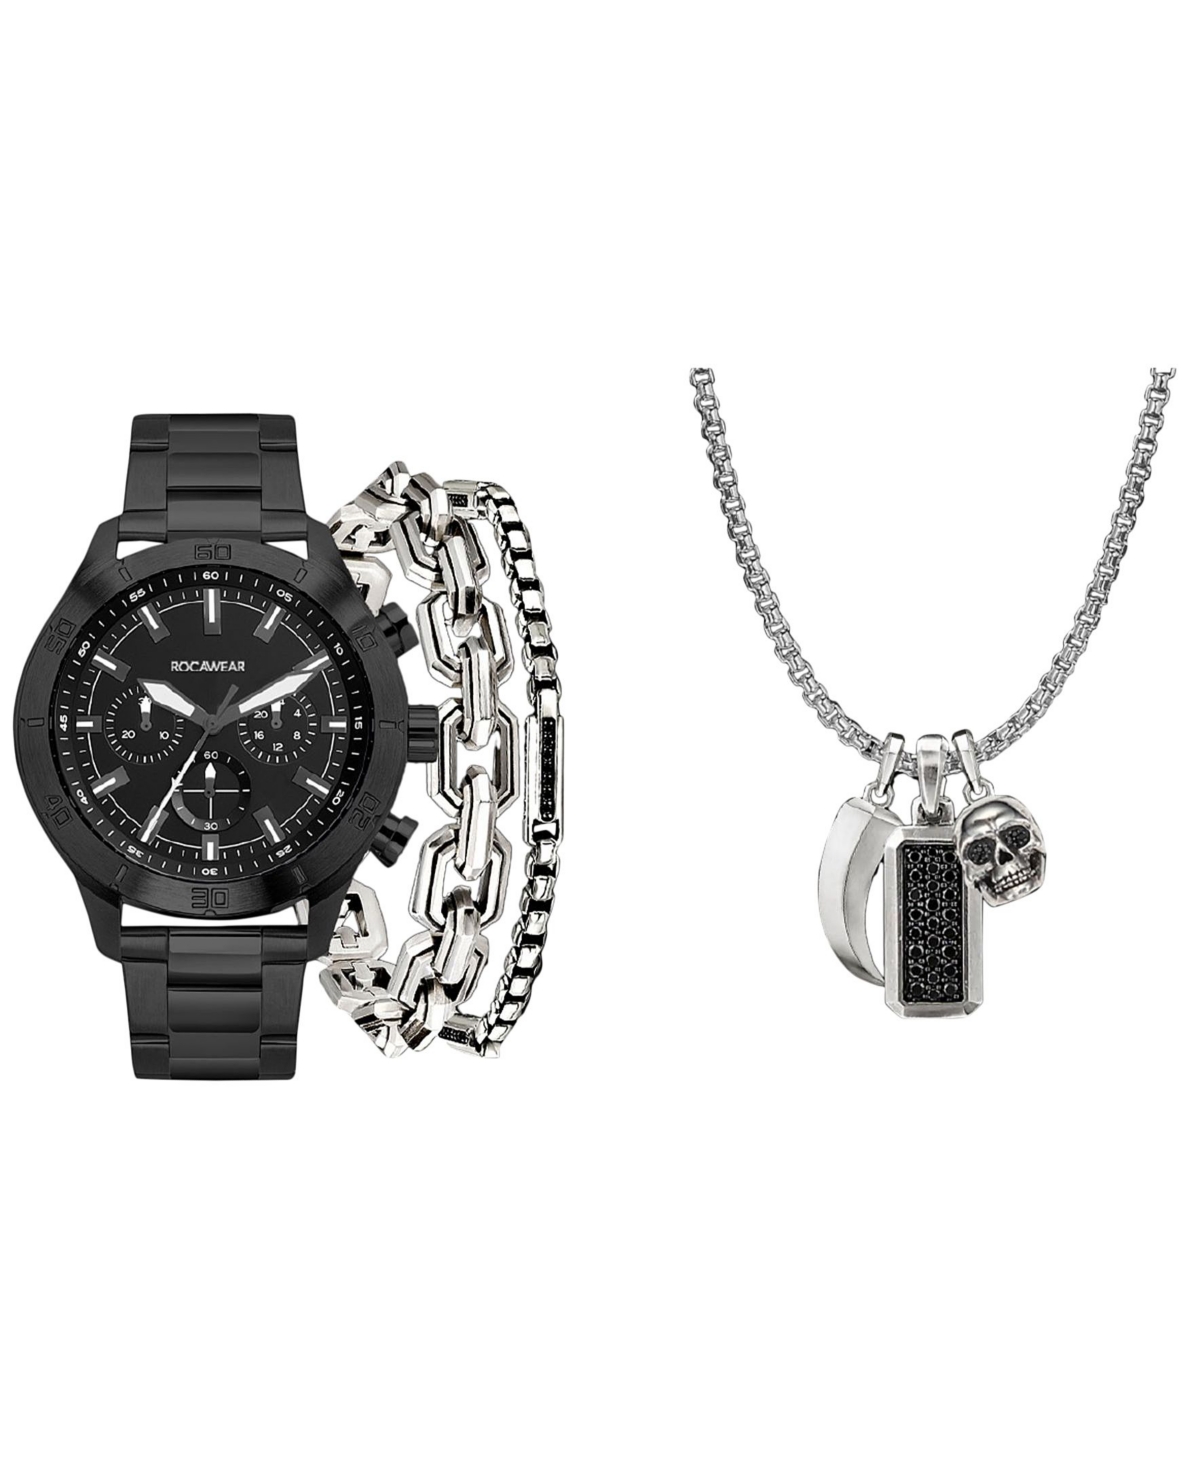 Men's Shiny Black Metal Bracelet Watch 49mm Set - Black